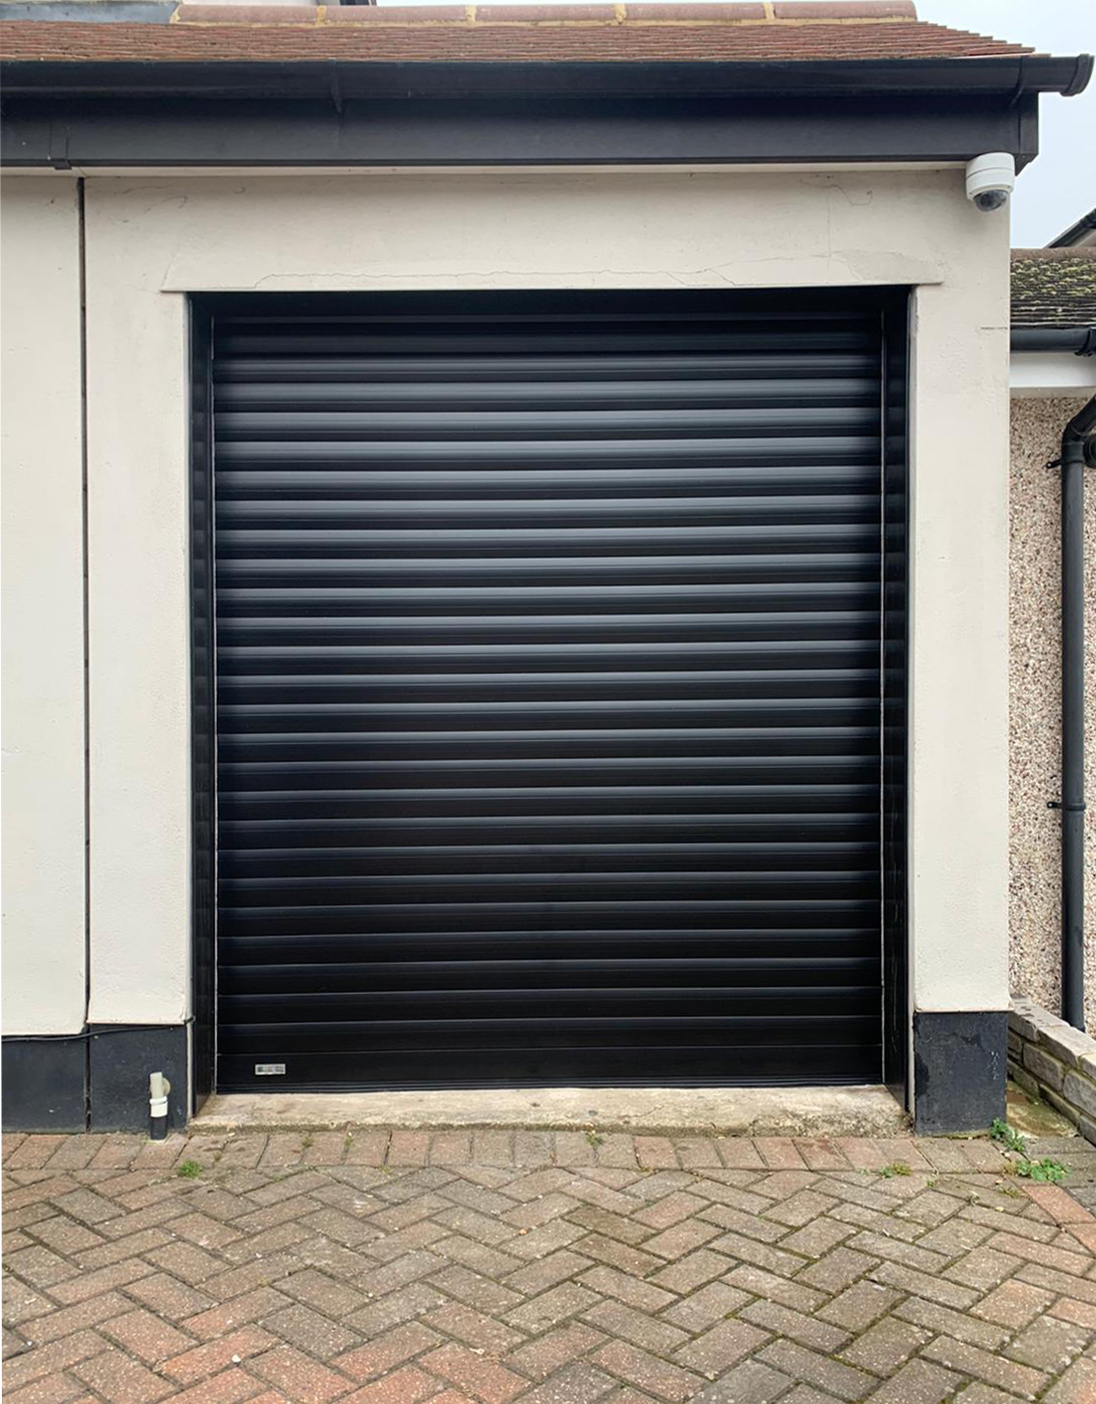 SWS SeceuroGlide Insulated Roller Garage Door Finished in Black & Installed in Stoneleigh